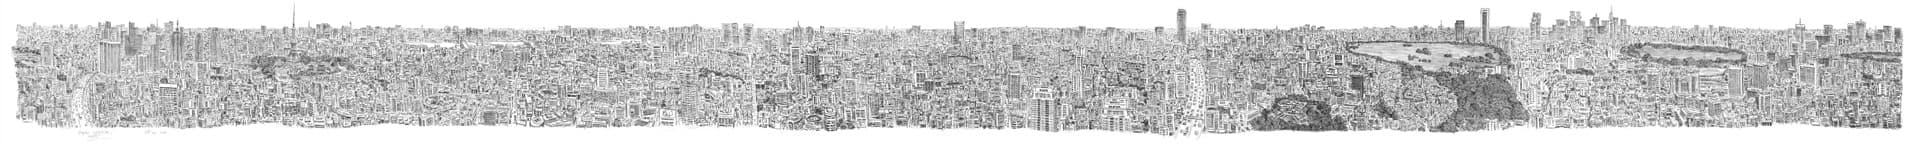 Stephen Wiltshire draws Tokyo Panorama